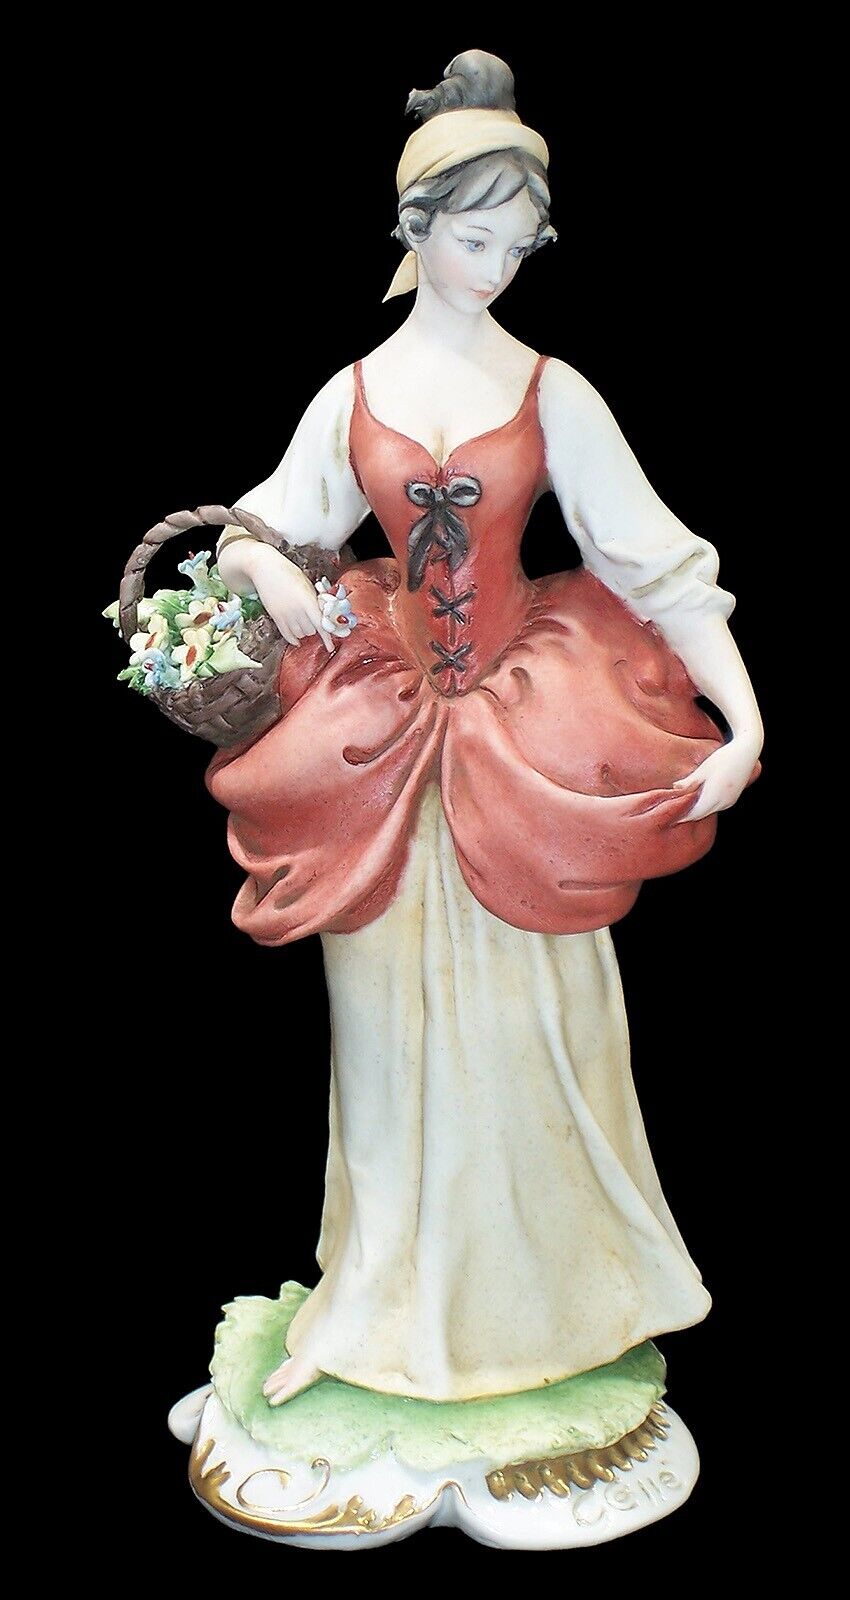 Rare Capodimonte Giuseppe Cappè Figurine, Lady With Flowers, c.1959, 7.25” High